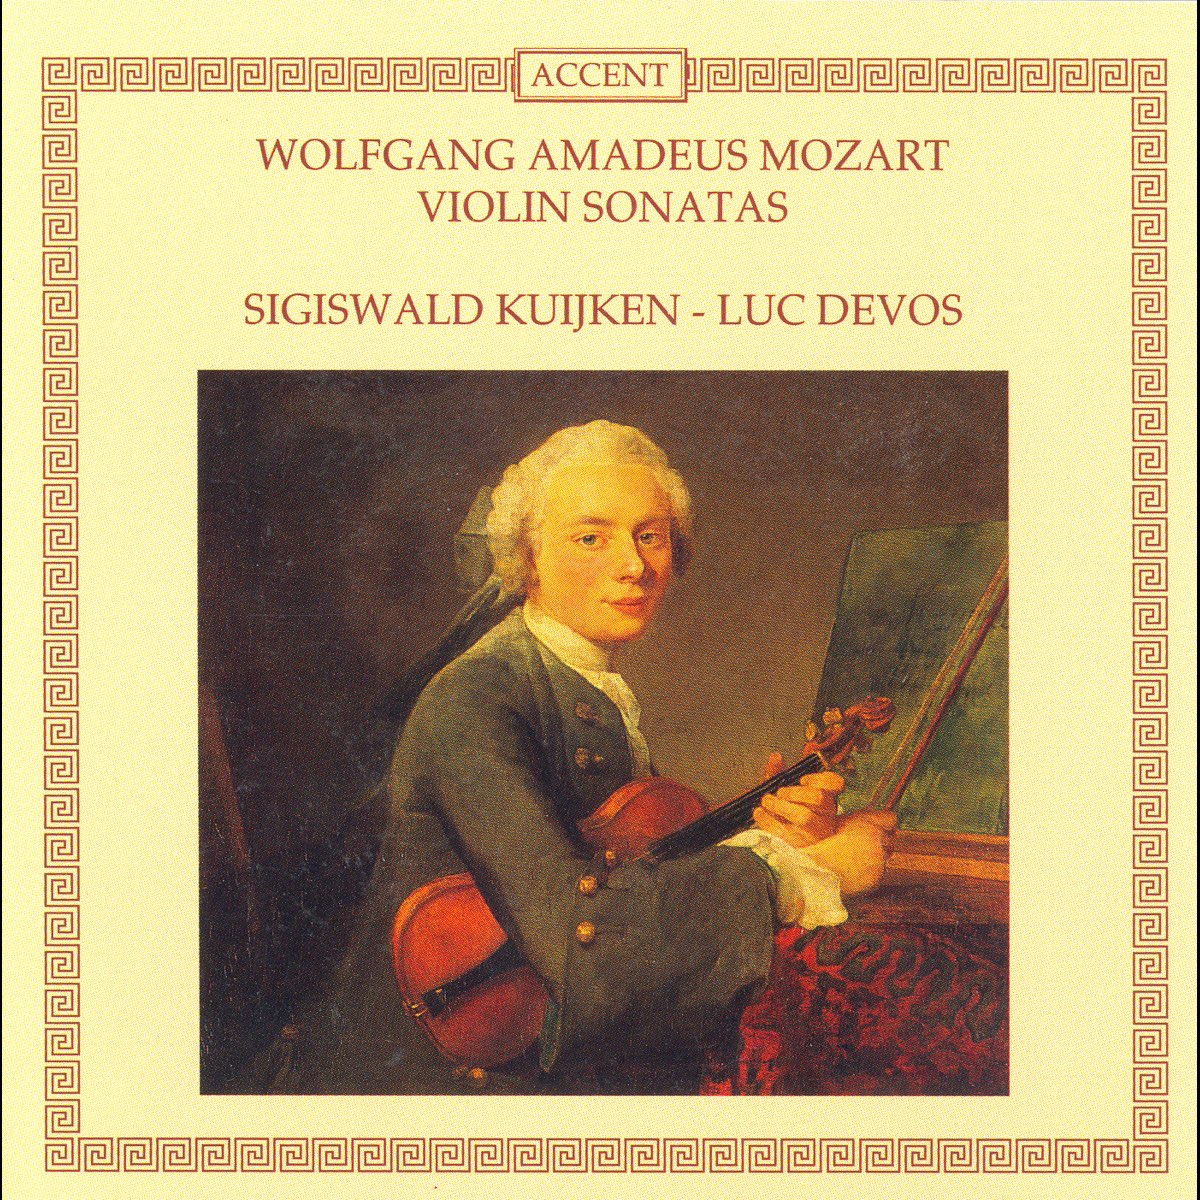 Музыка скрипка моцарт. Mozart Violin. Моцарт со скрипкой.